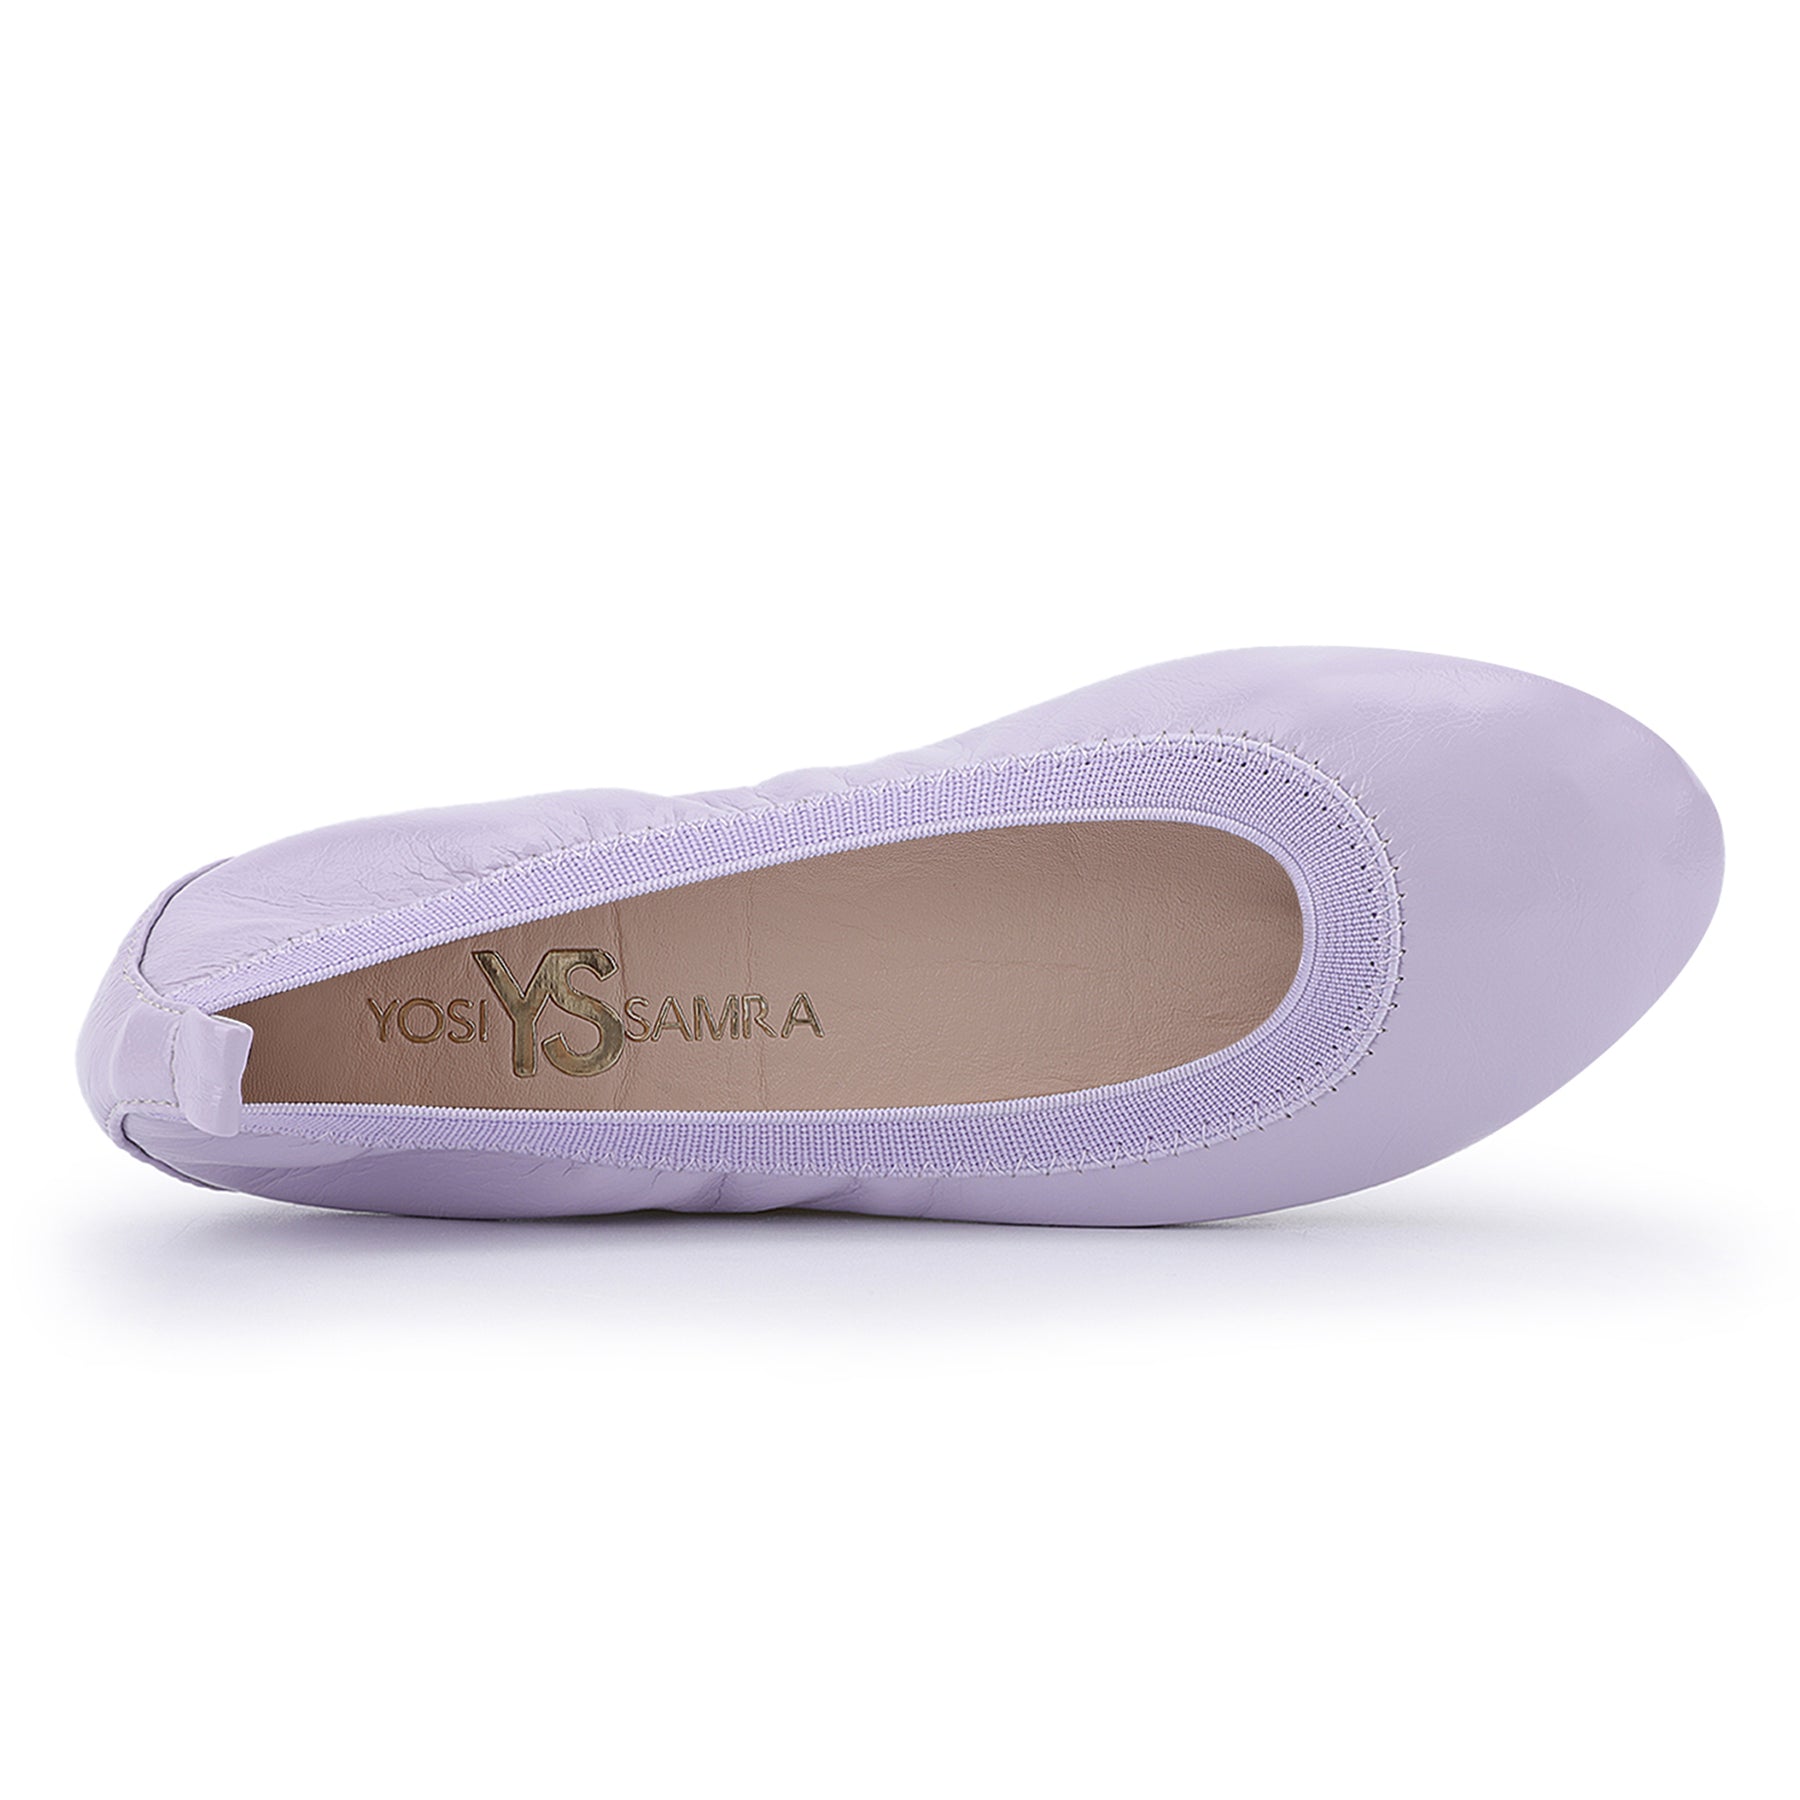 Miss Samara Ballet Flat in Dusty Lavender Patent - Kids